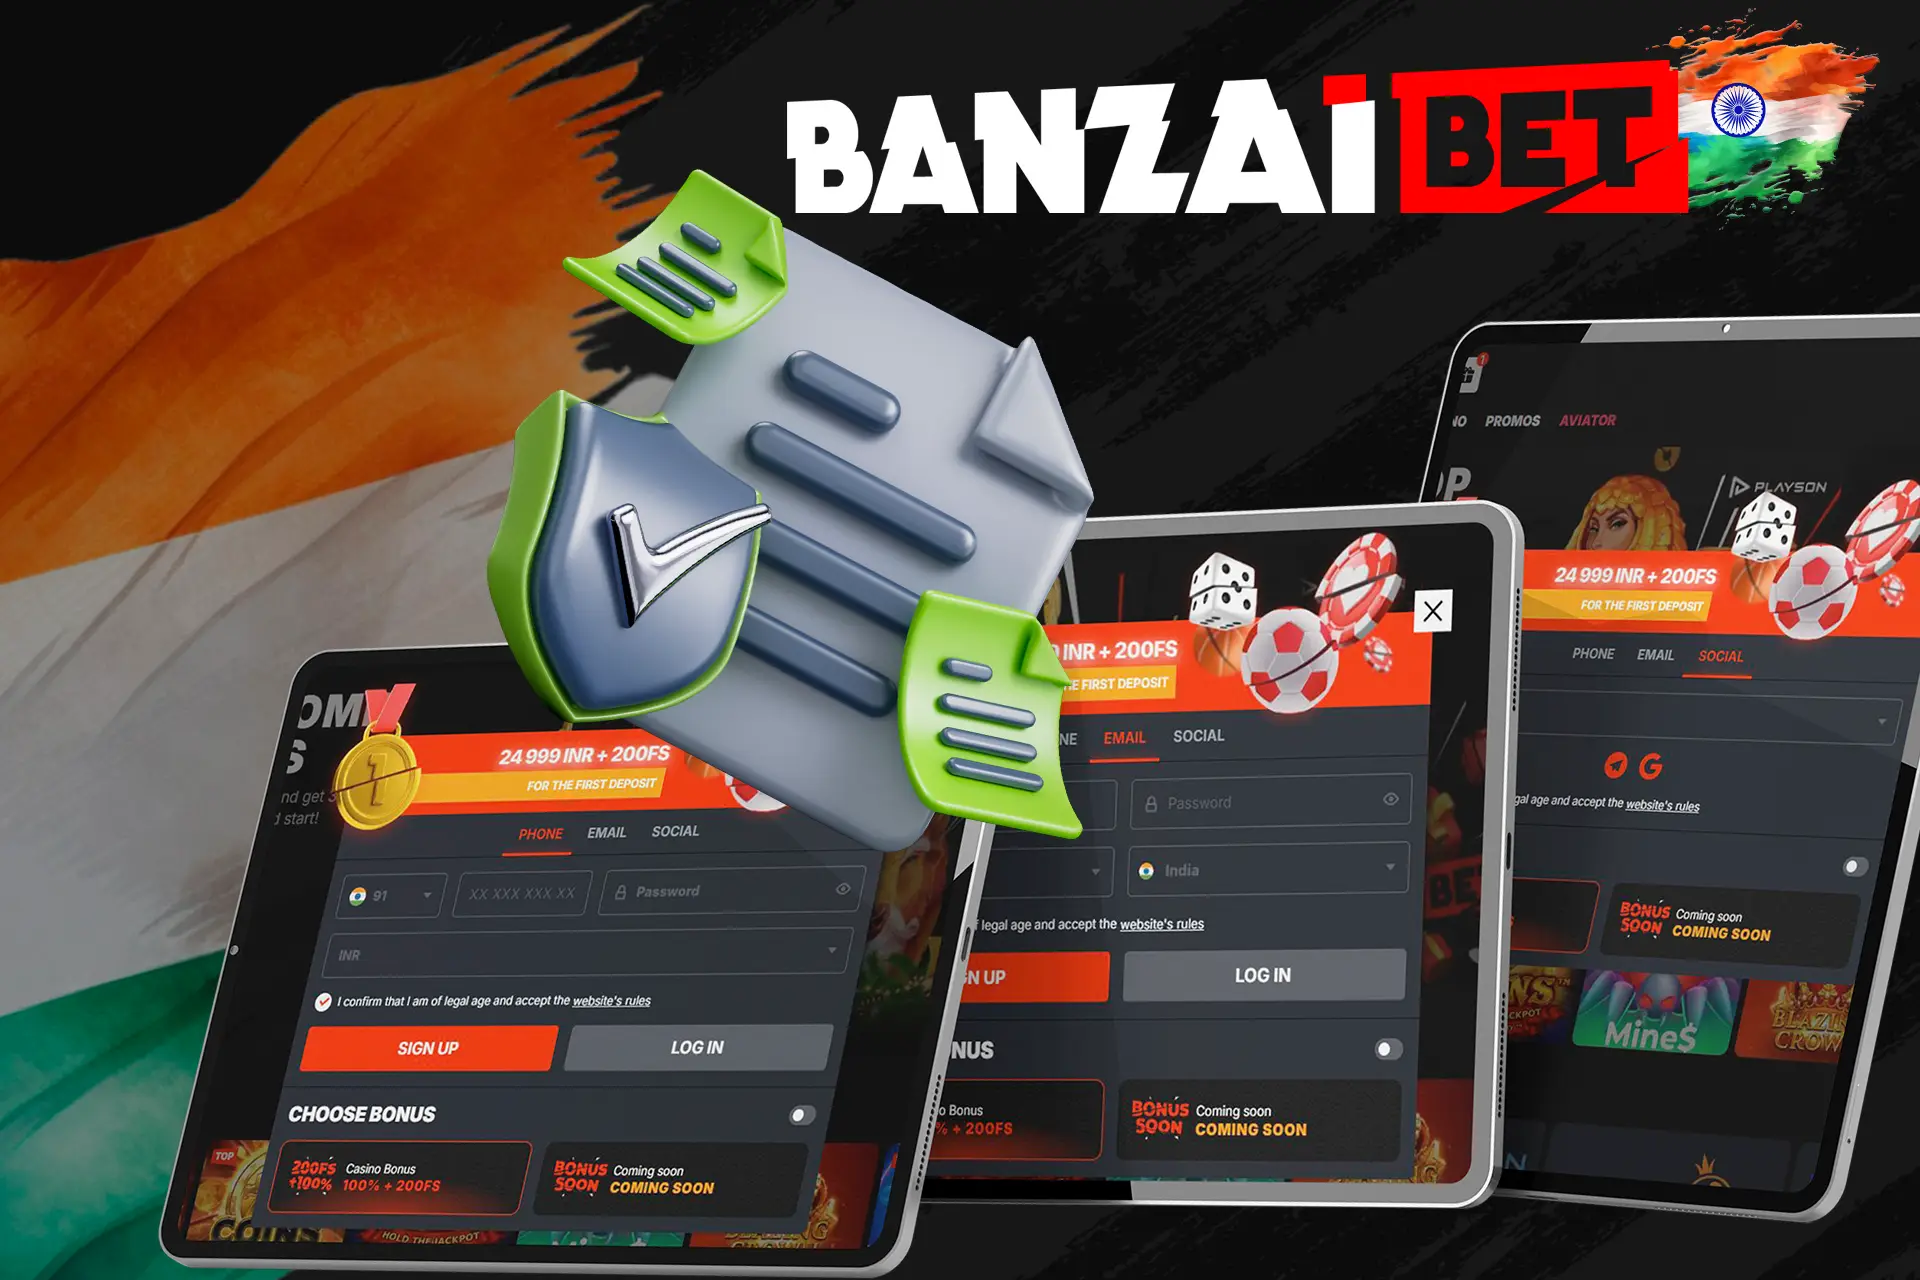 Register on the Banzaibet India website